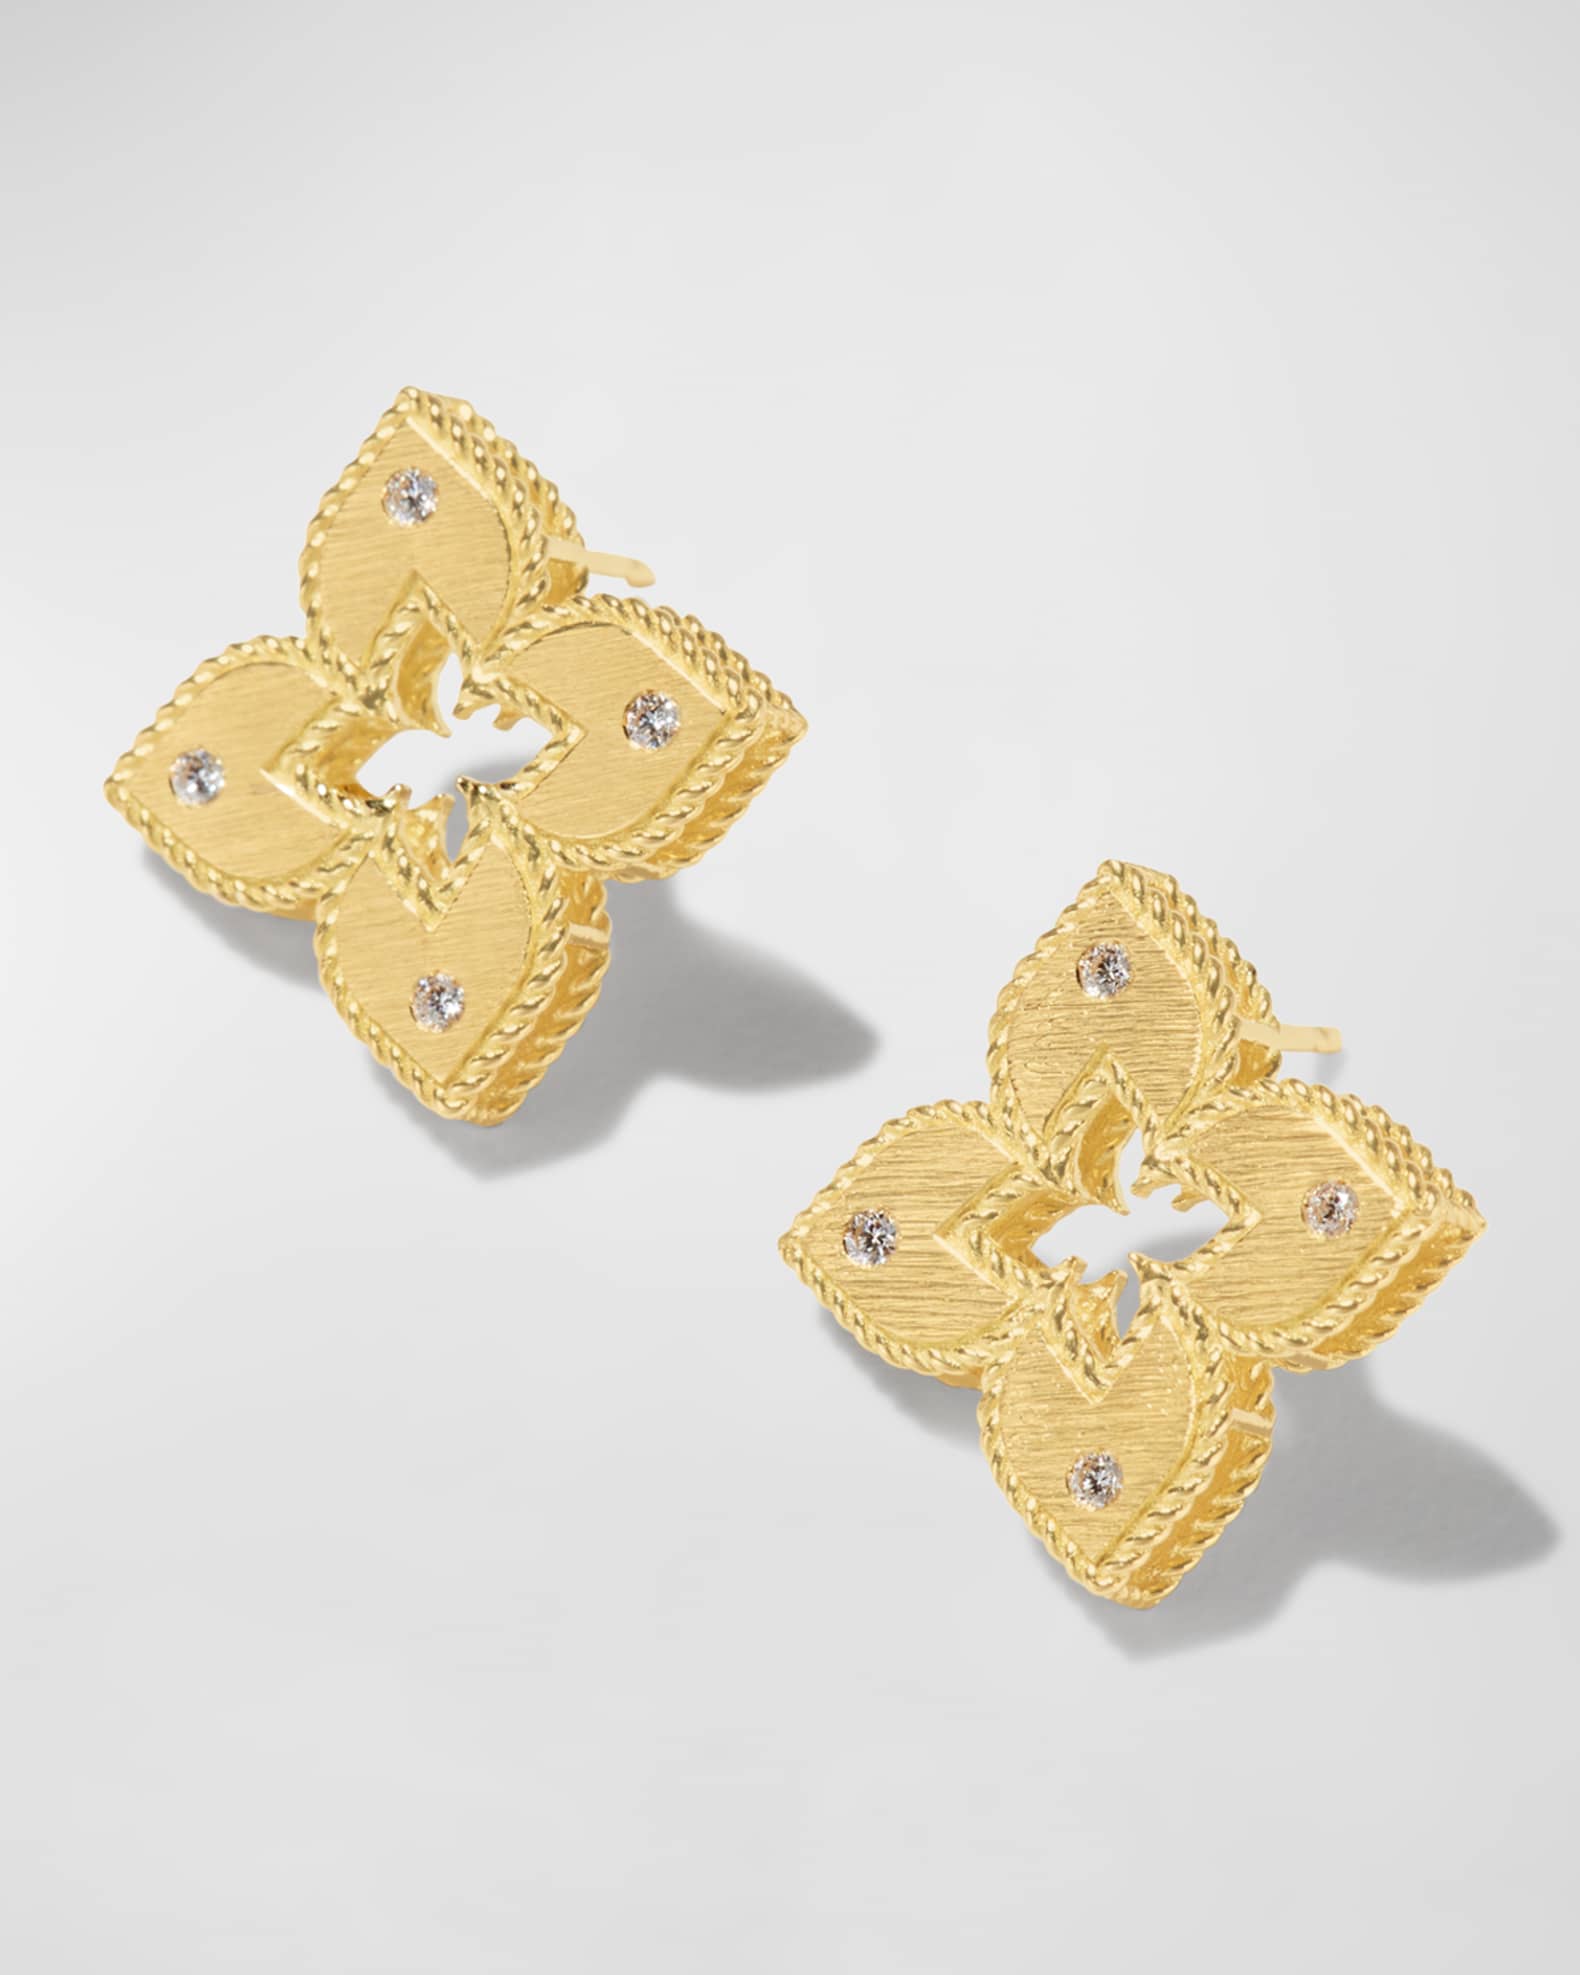 Louis Vuitton Sun Blossom Stud 18K White Gold and Diamonds Earrings